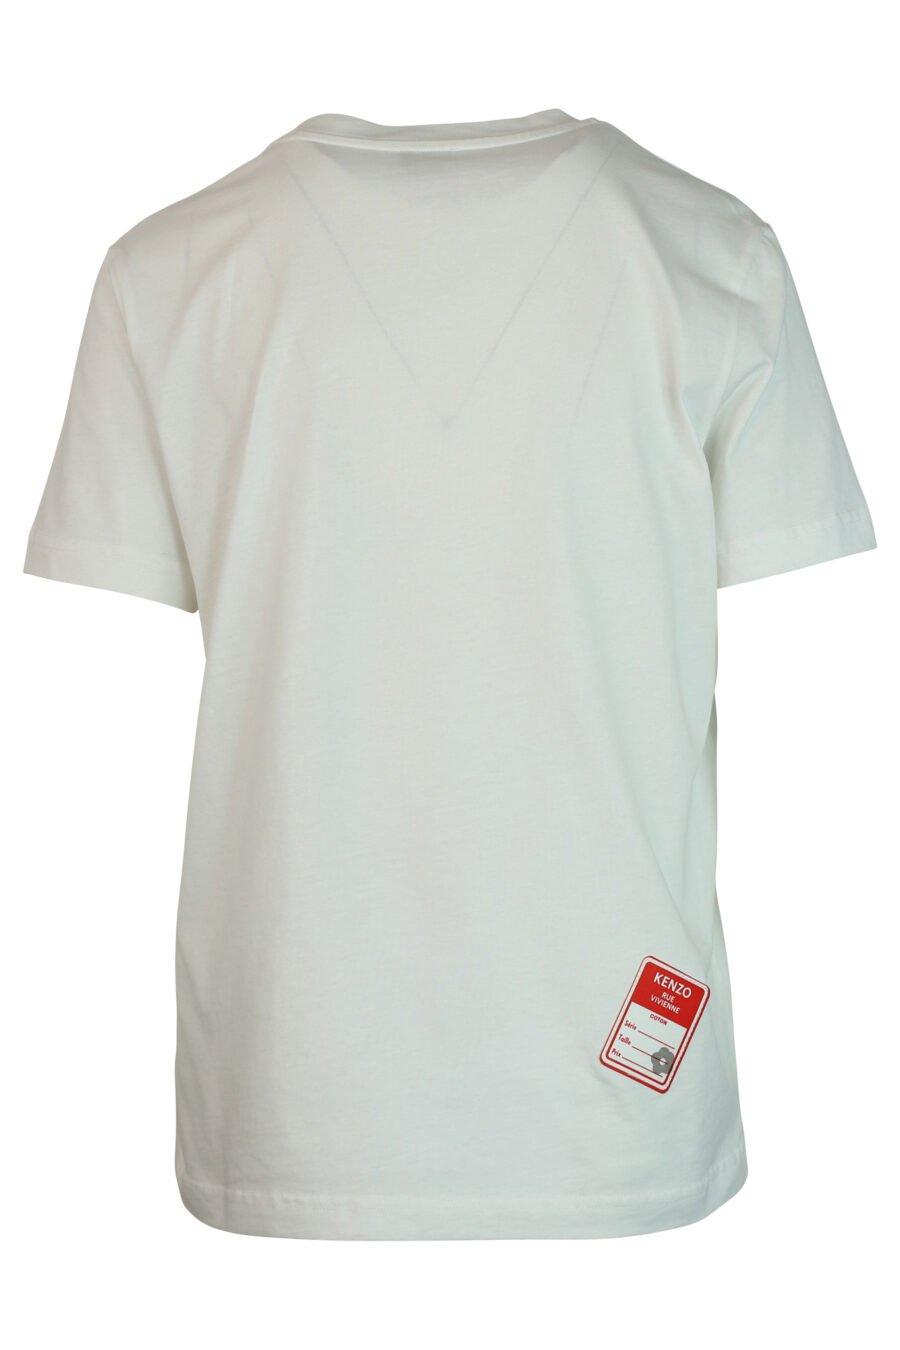 Camiseta blanca con maxilogo "rue vivenne" negro - 3612230461161 2